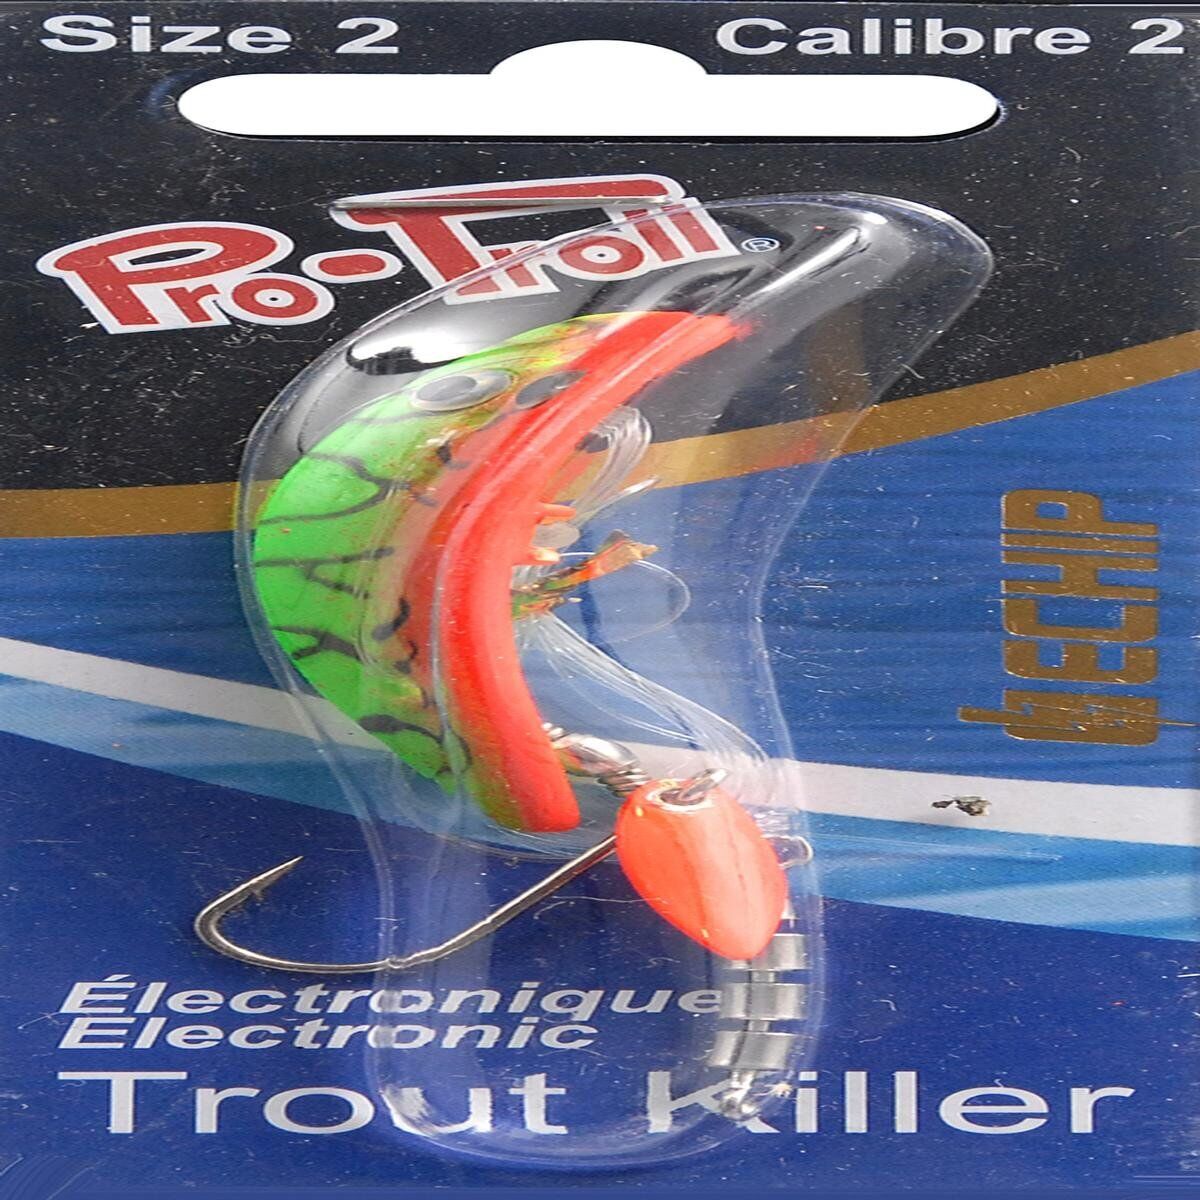 Pro-Troll Trout Killer Fishing Lure, 2-Inch, Fire Tiger